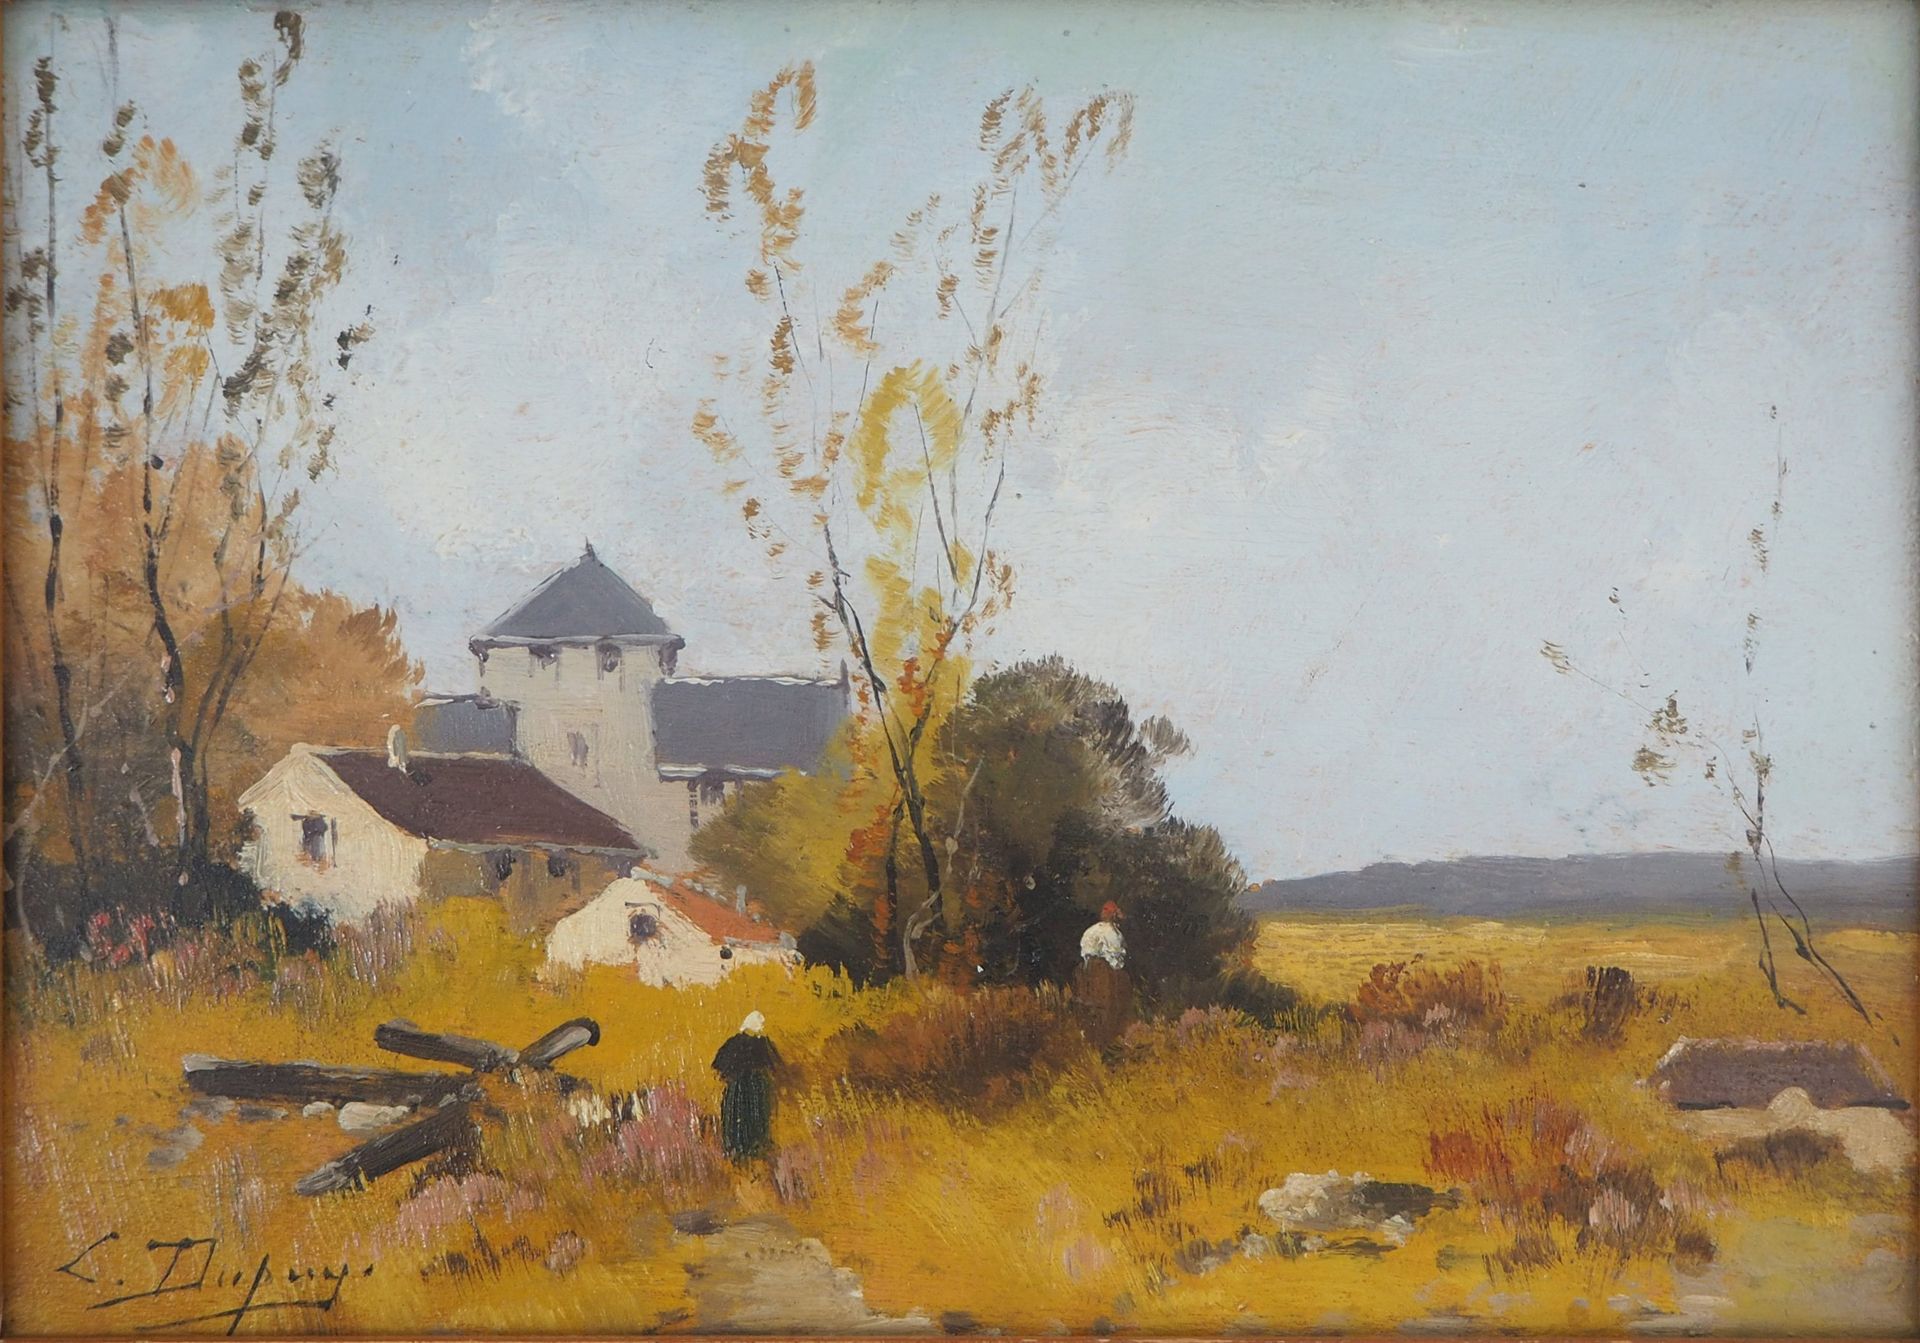 Eugène GALIEN-LALOUE Eugène Galien-Laloue (1854-1941)

Fattoria in autunno

Olio&hellip;